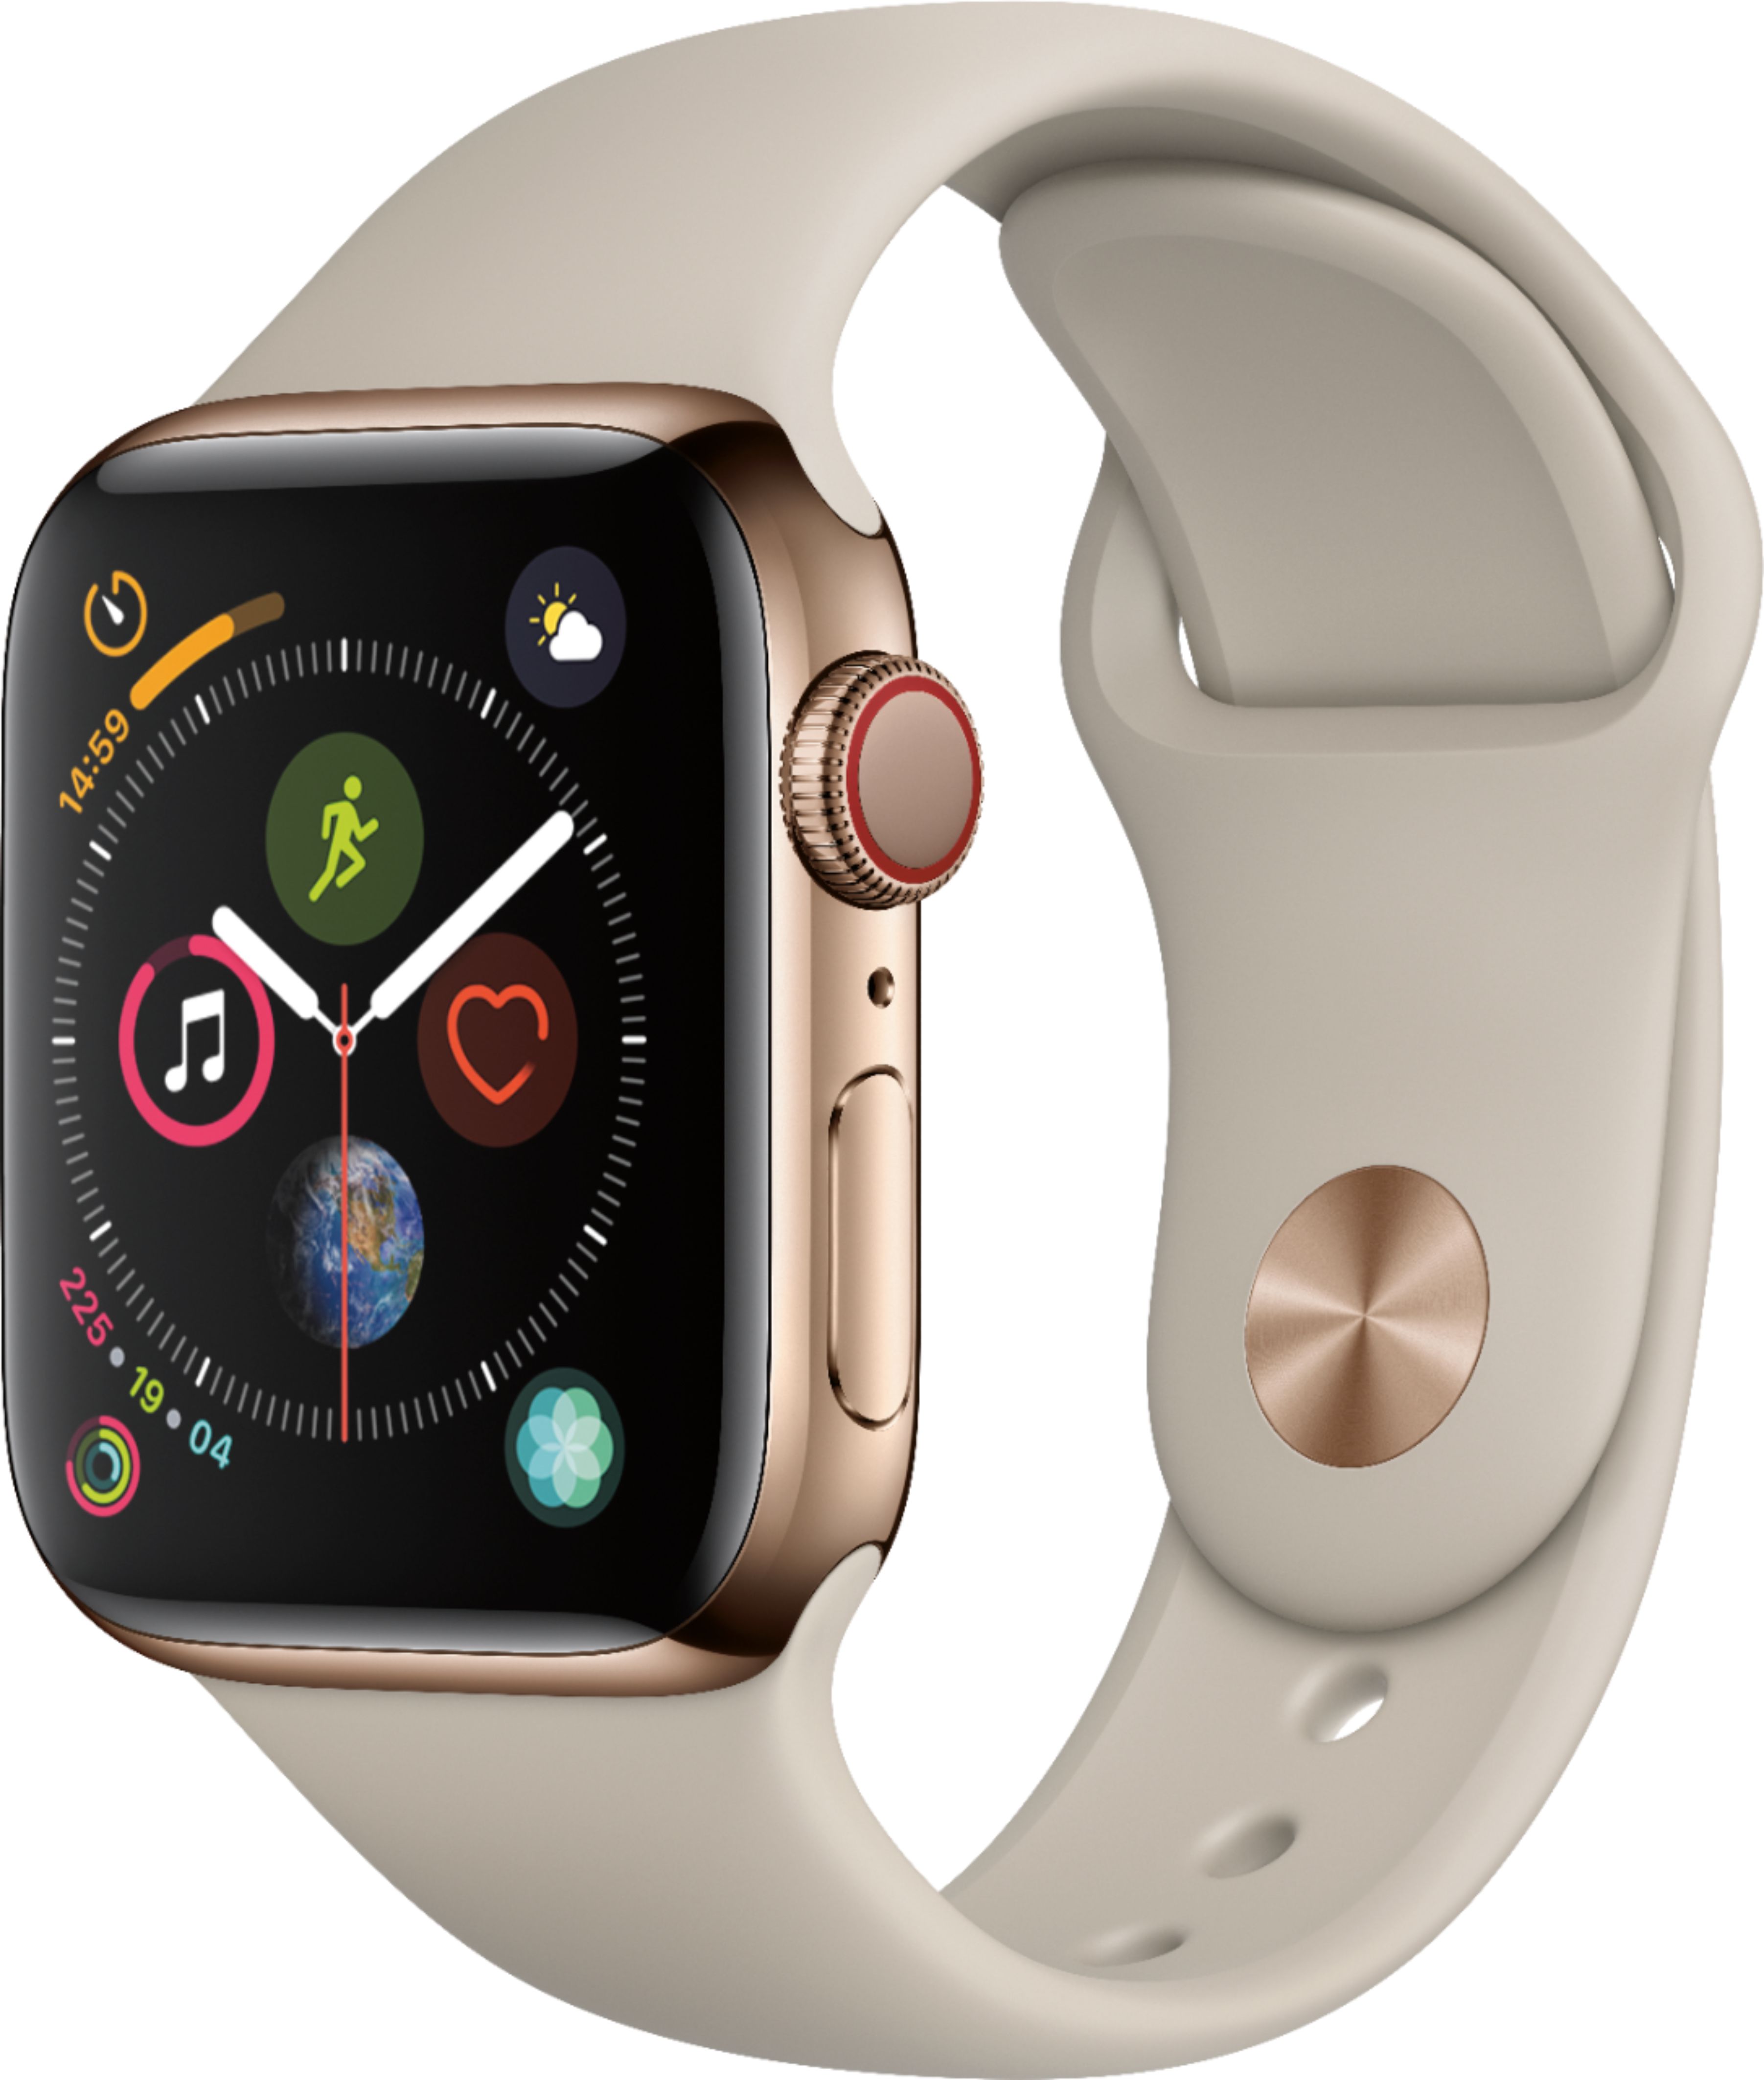 Geek Squad Certified Refurbished Apple Watch Series 4 (GPS + Cellular Apple Watch Series 4 Gold Stainless Steel